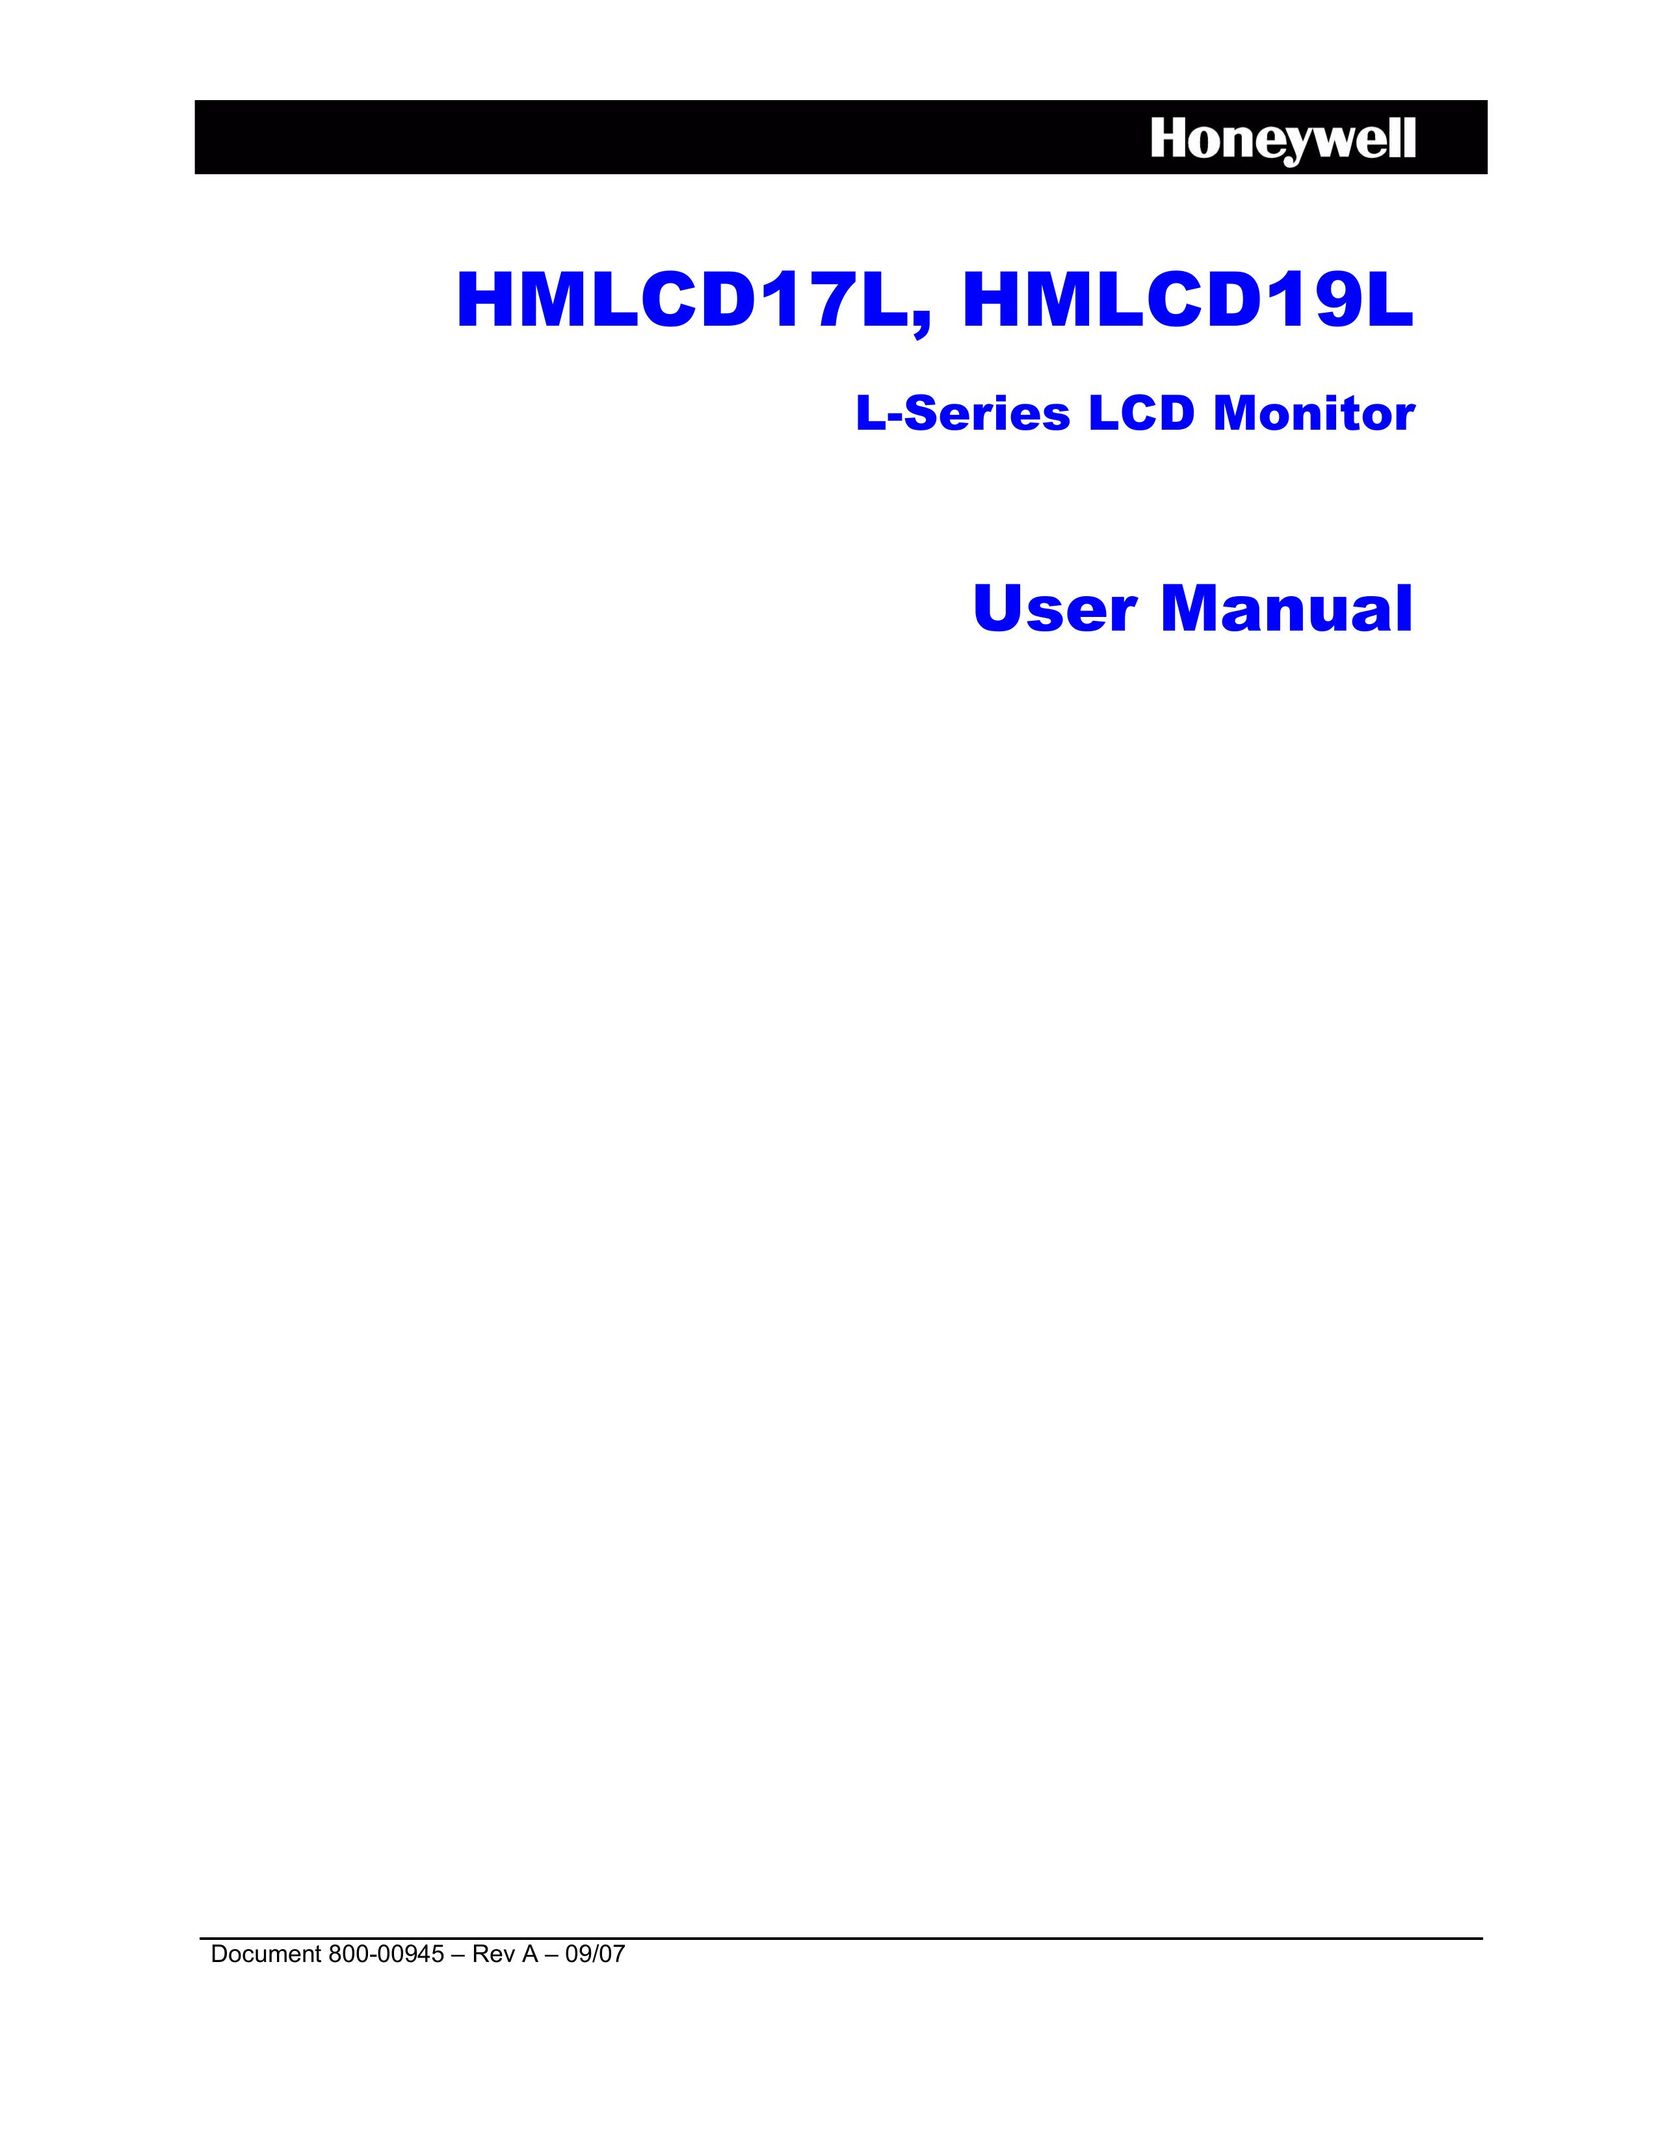 Honeywell HMLCD17L Computer Monitor User Manual